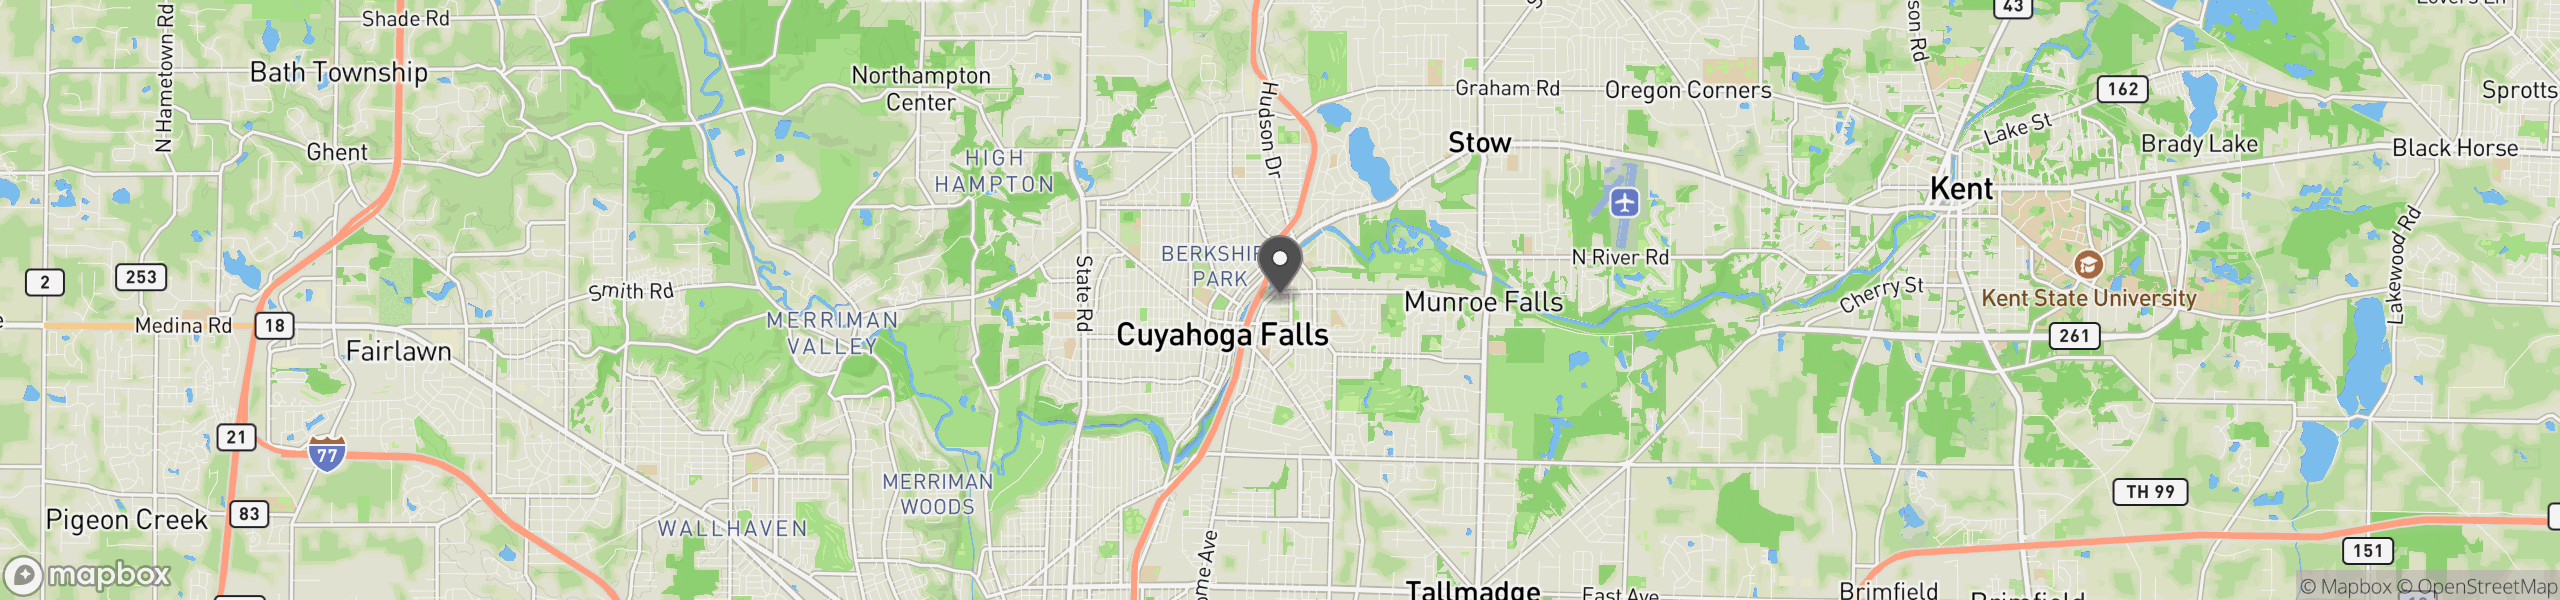 Cuyahoga Falls, OH 44221